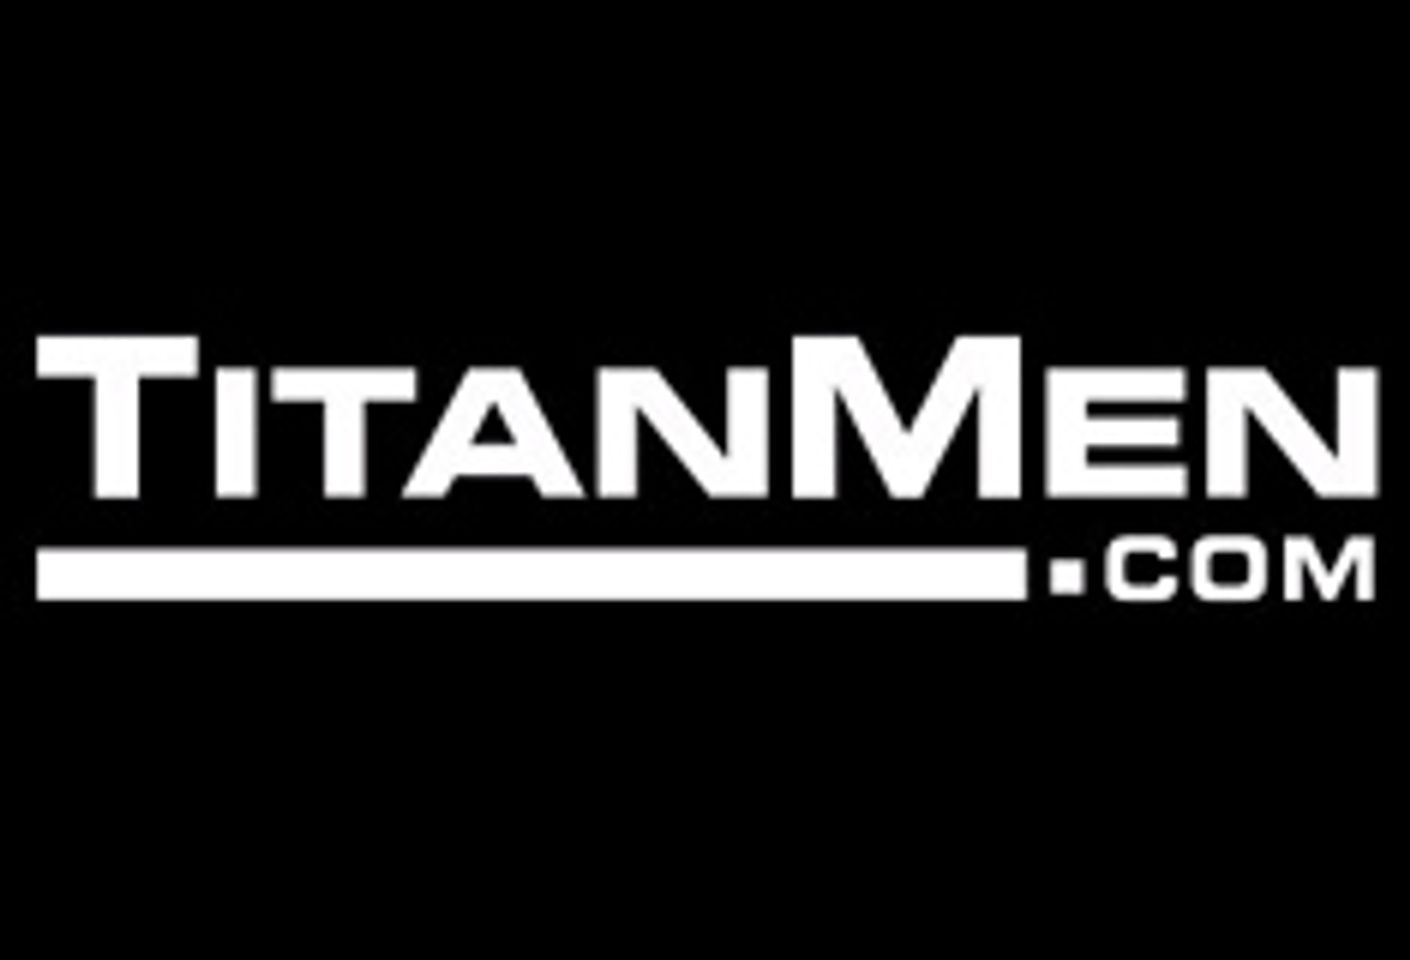 TitanMen Premieres DRM Video on NakedSword.com